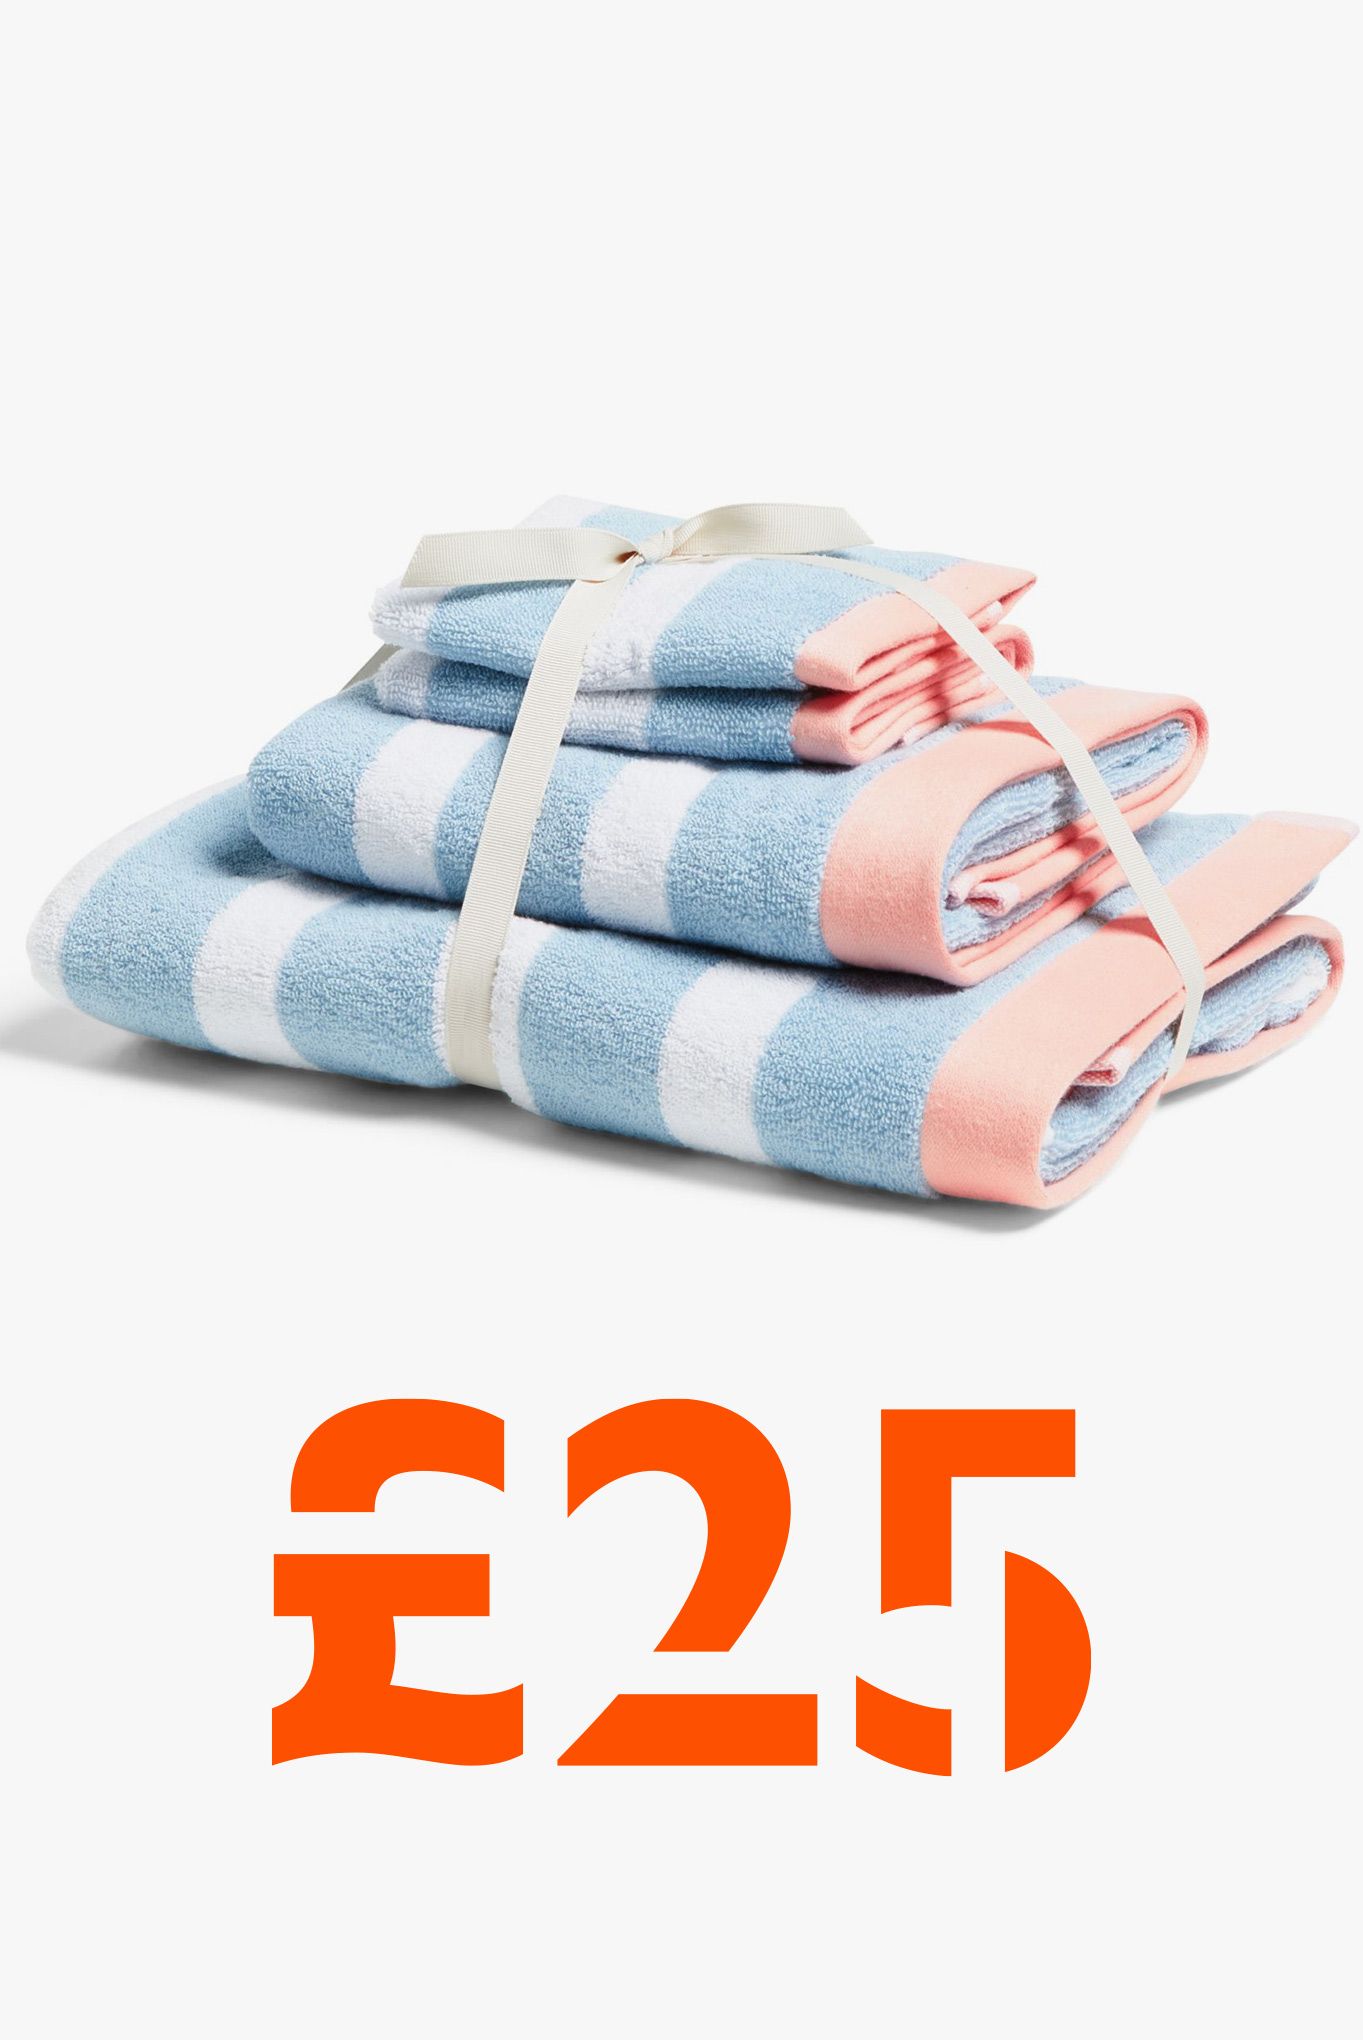 ANYDAY John Lewis & Partners Stripe 4 Piece Towel Bale, Pink/Blue £25